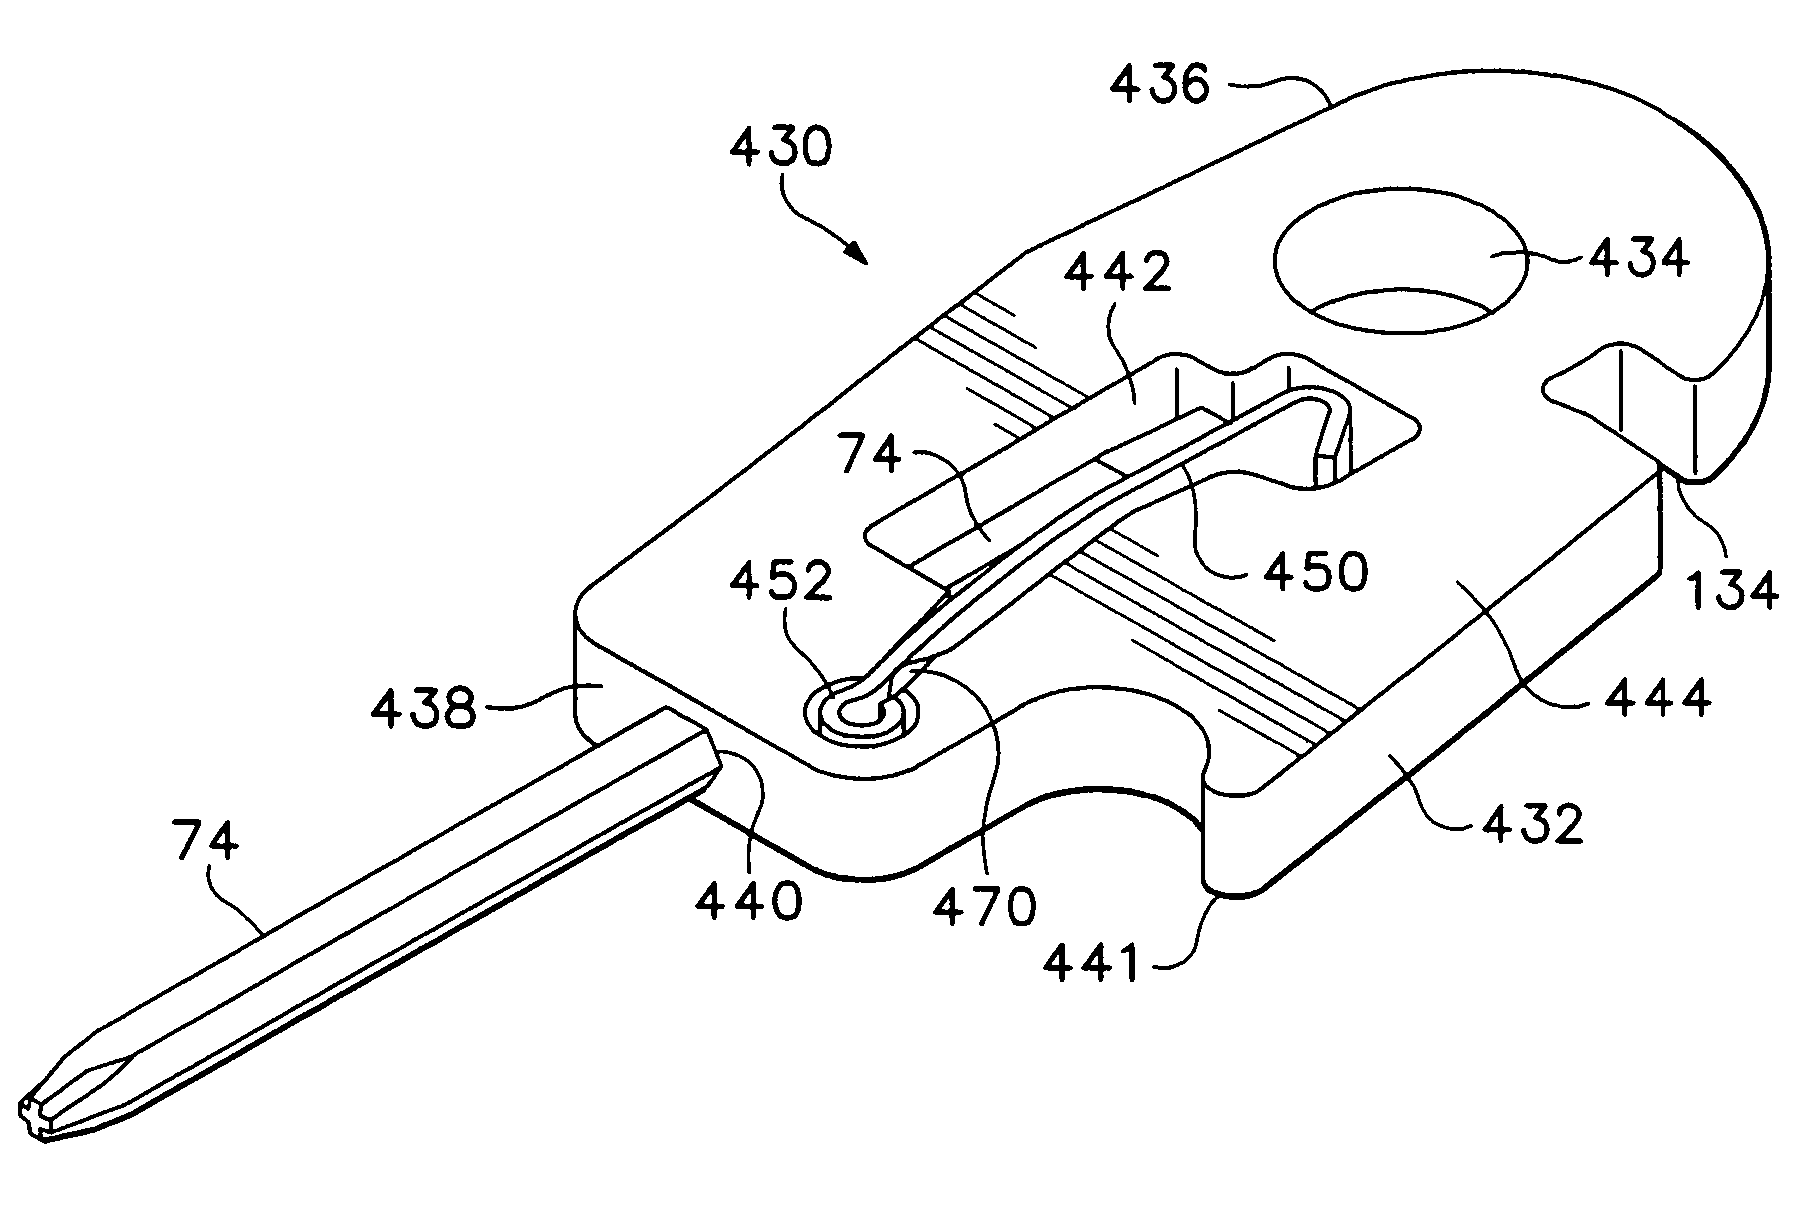 Multipurpose folding tool with tool bit holder and blade lock